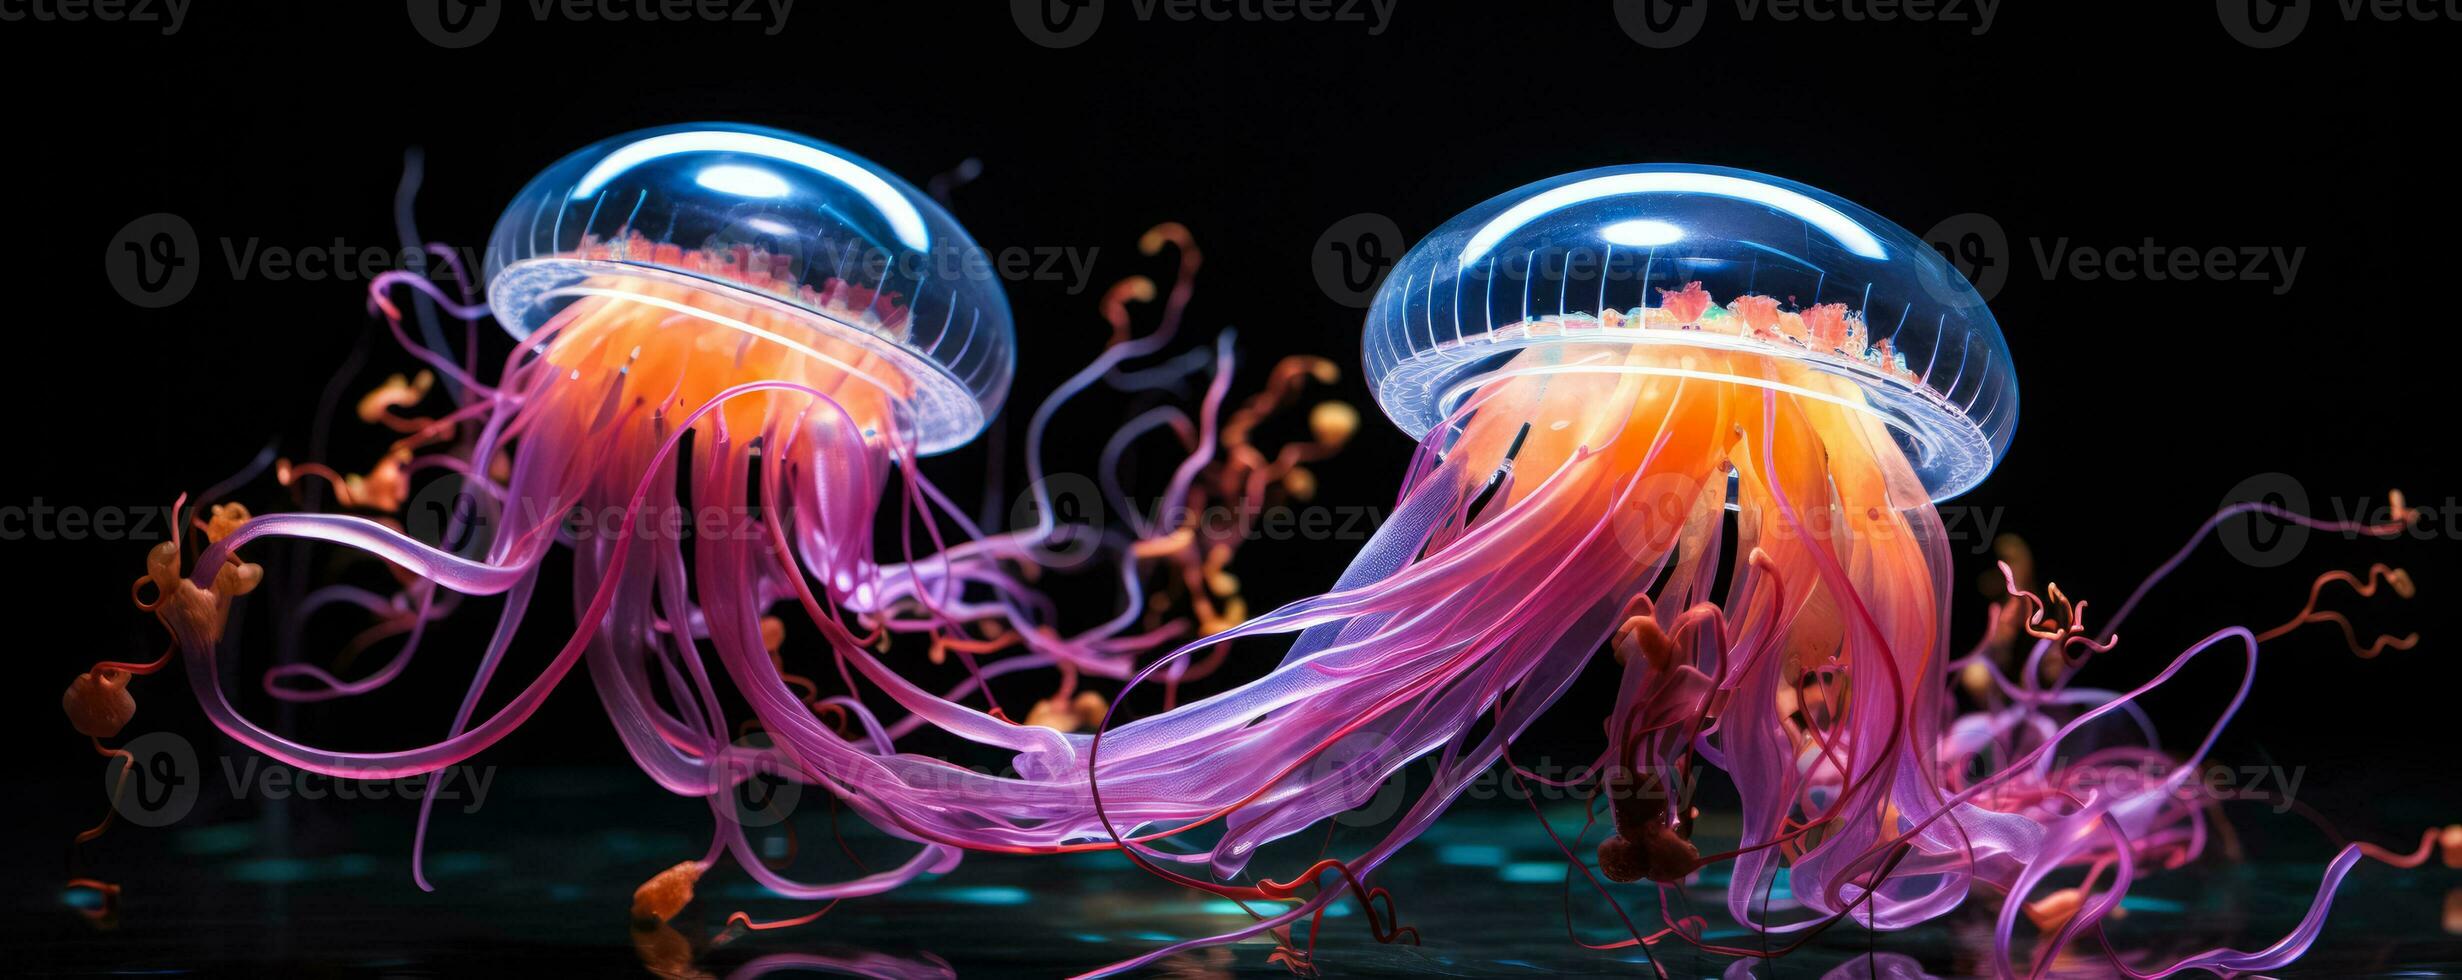 Deep sea creatures illuminating a dark aquatic abyss with vibrant hues photo